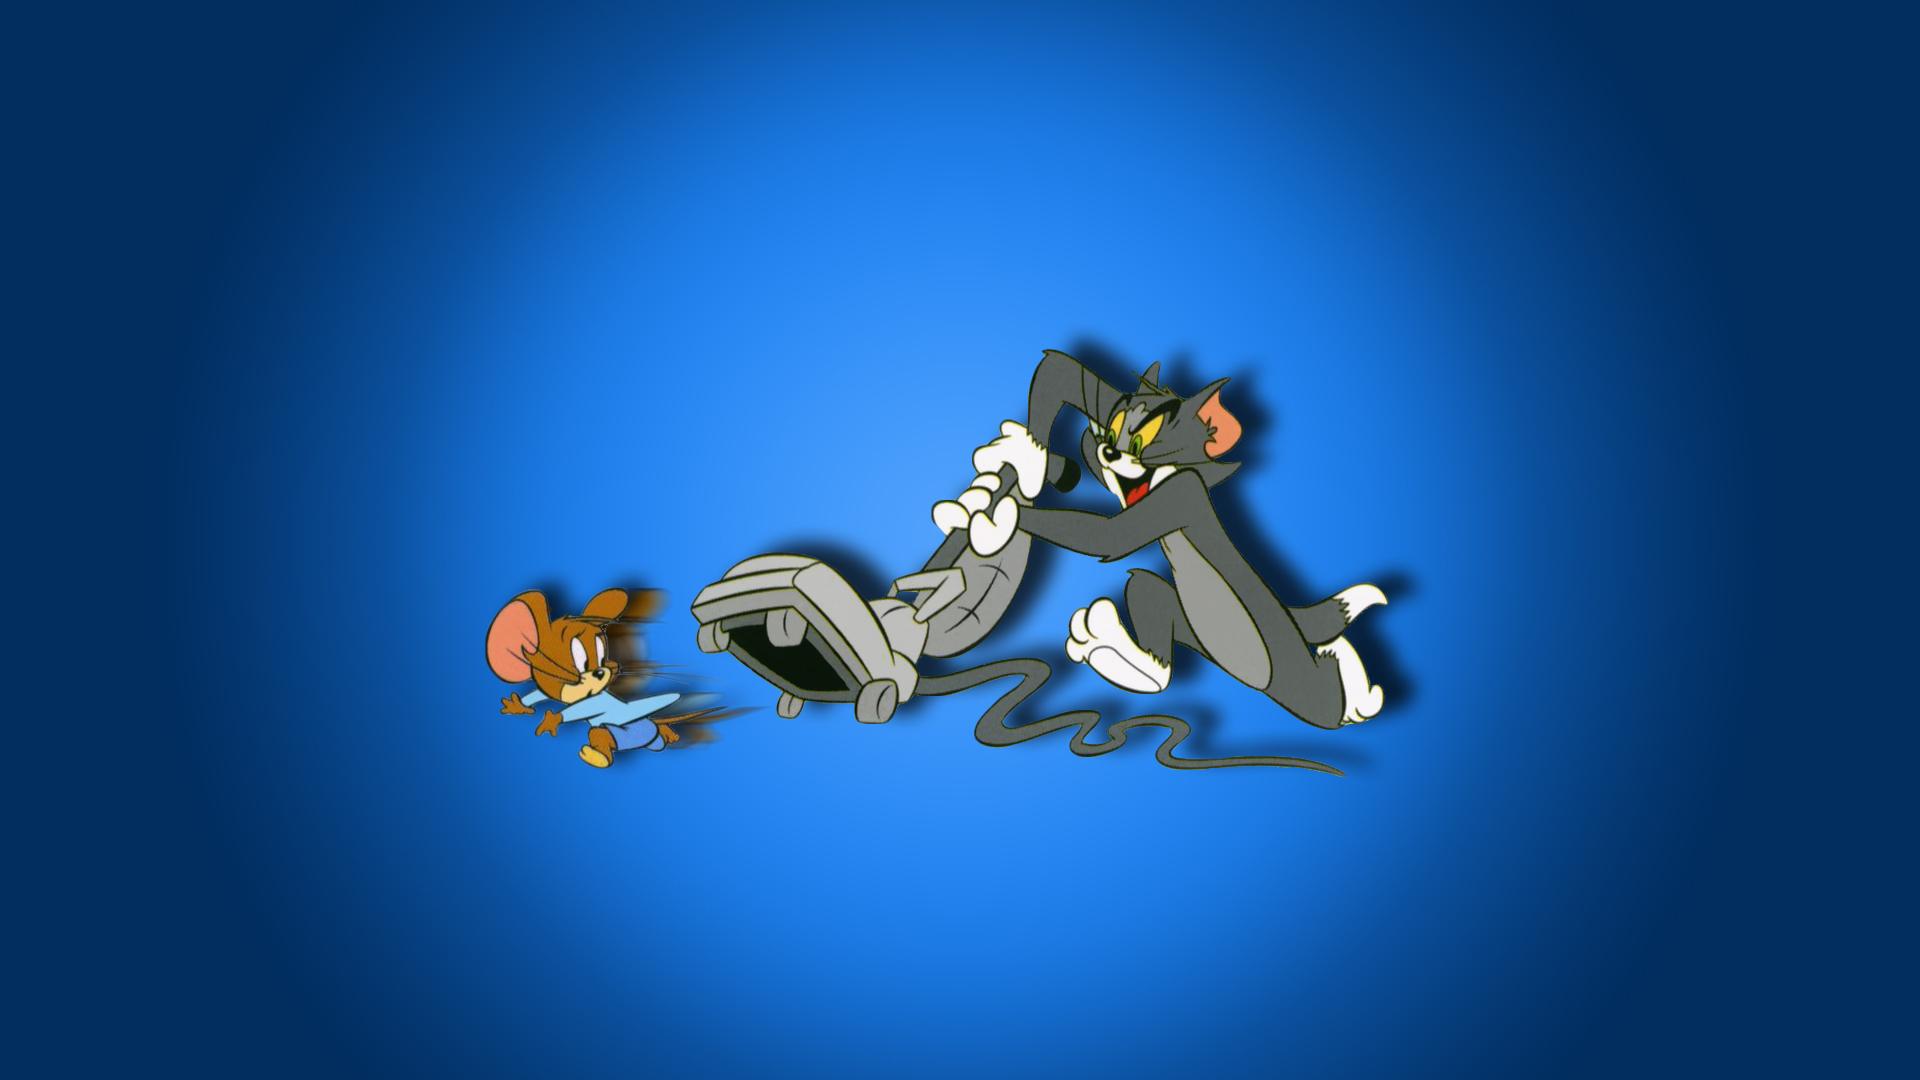 Tom and Jerry Desktop Wallpaper 51375 1920x1080px